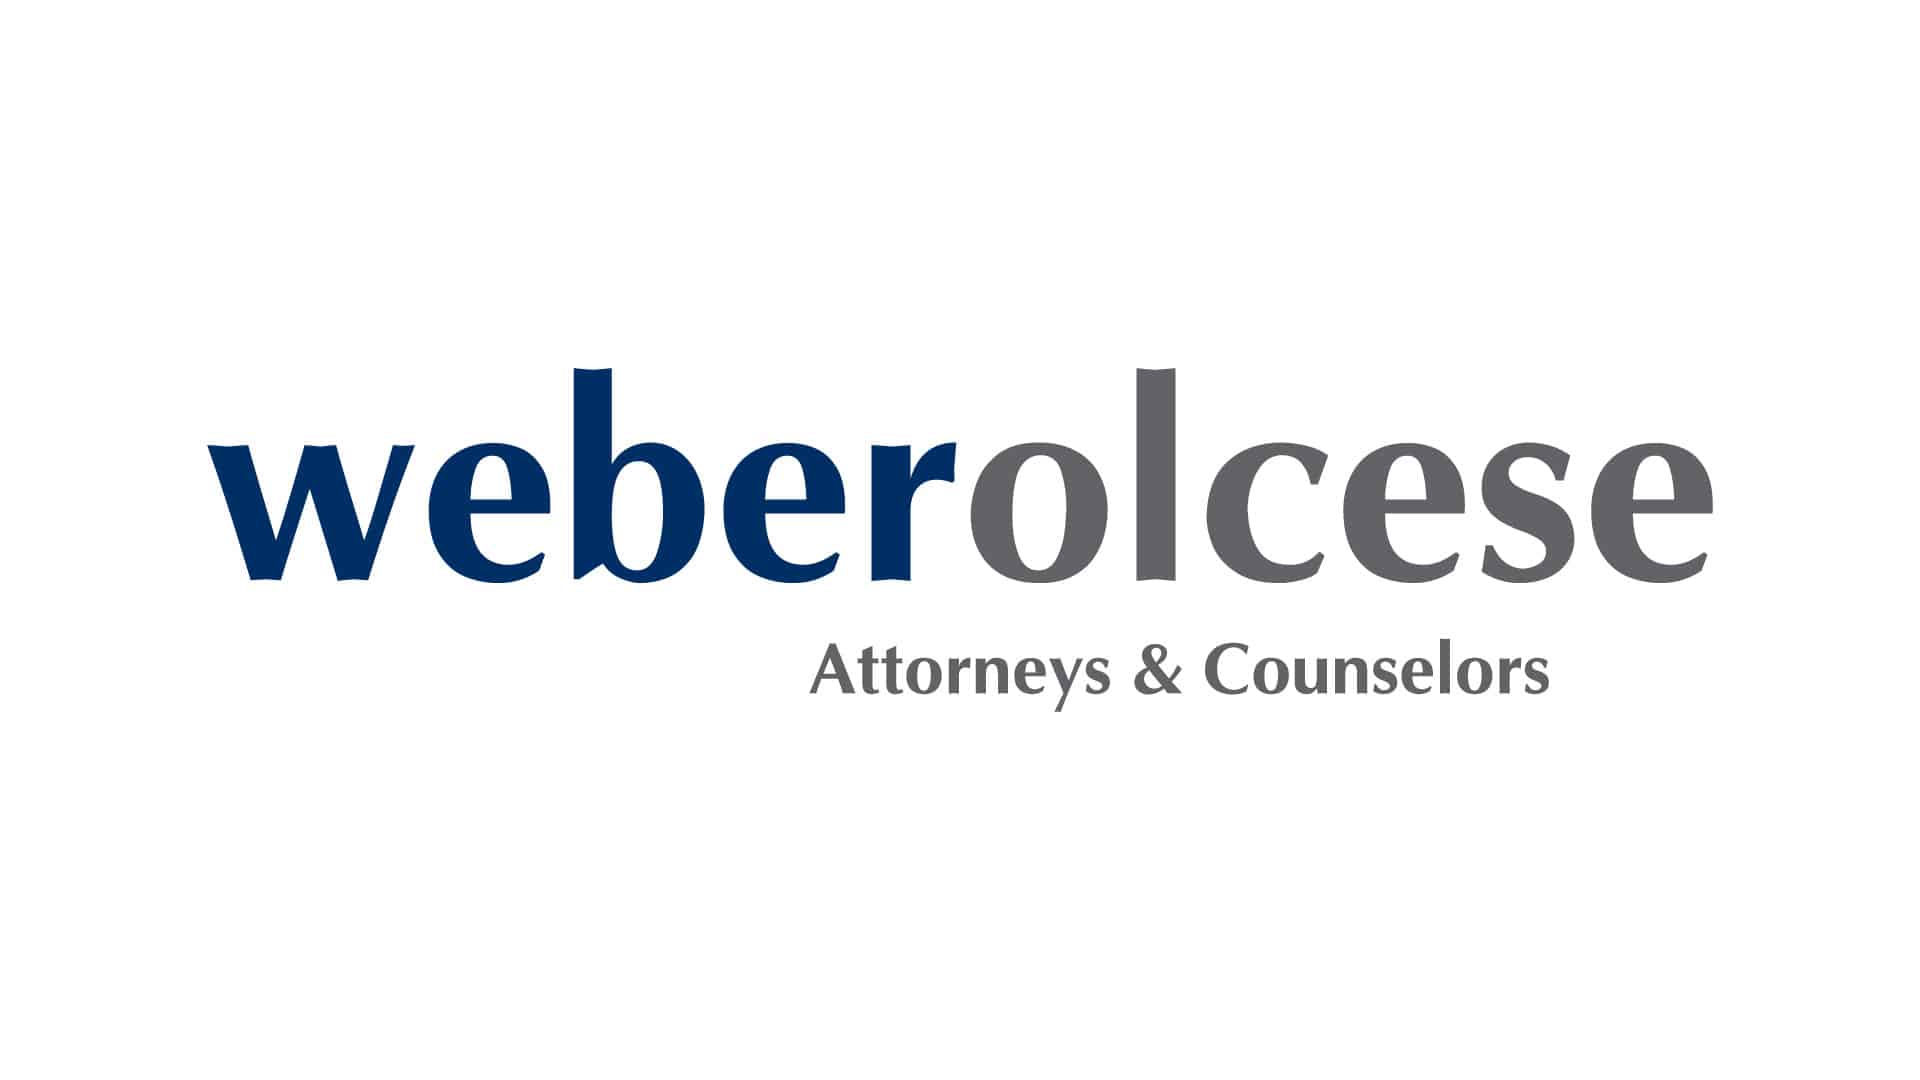 Weber Olcese Attorneys & Councelors official logo